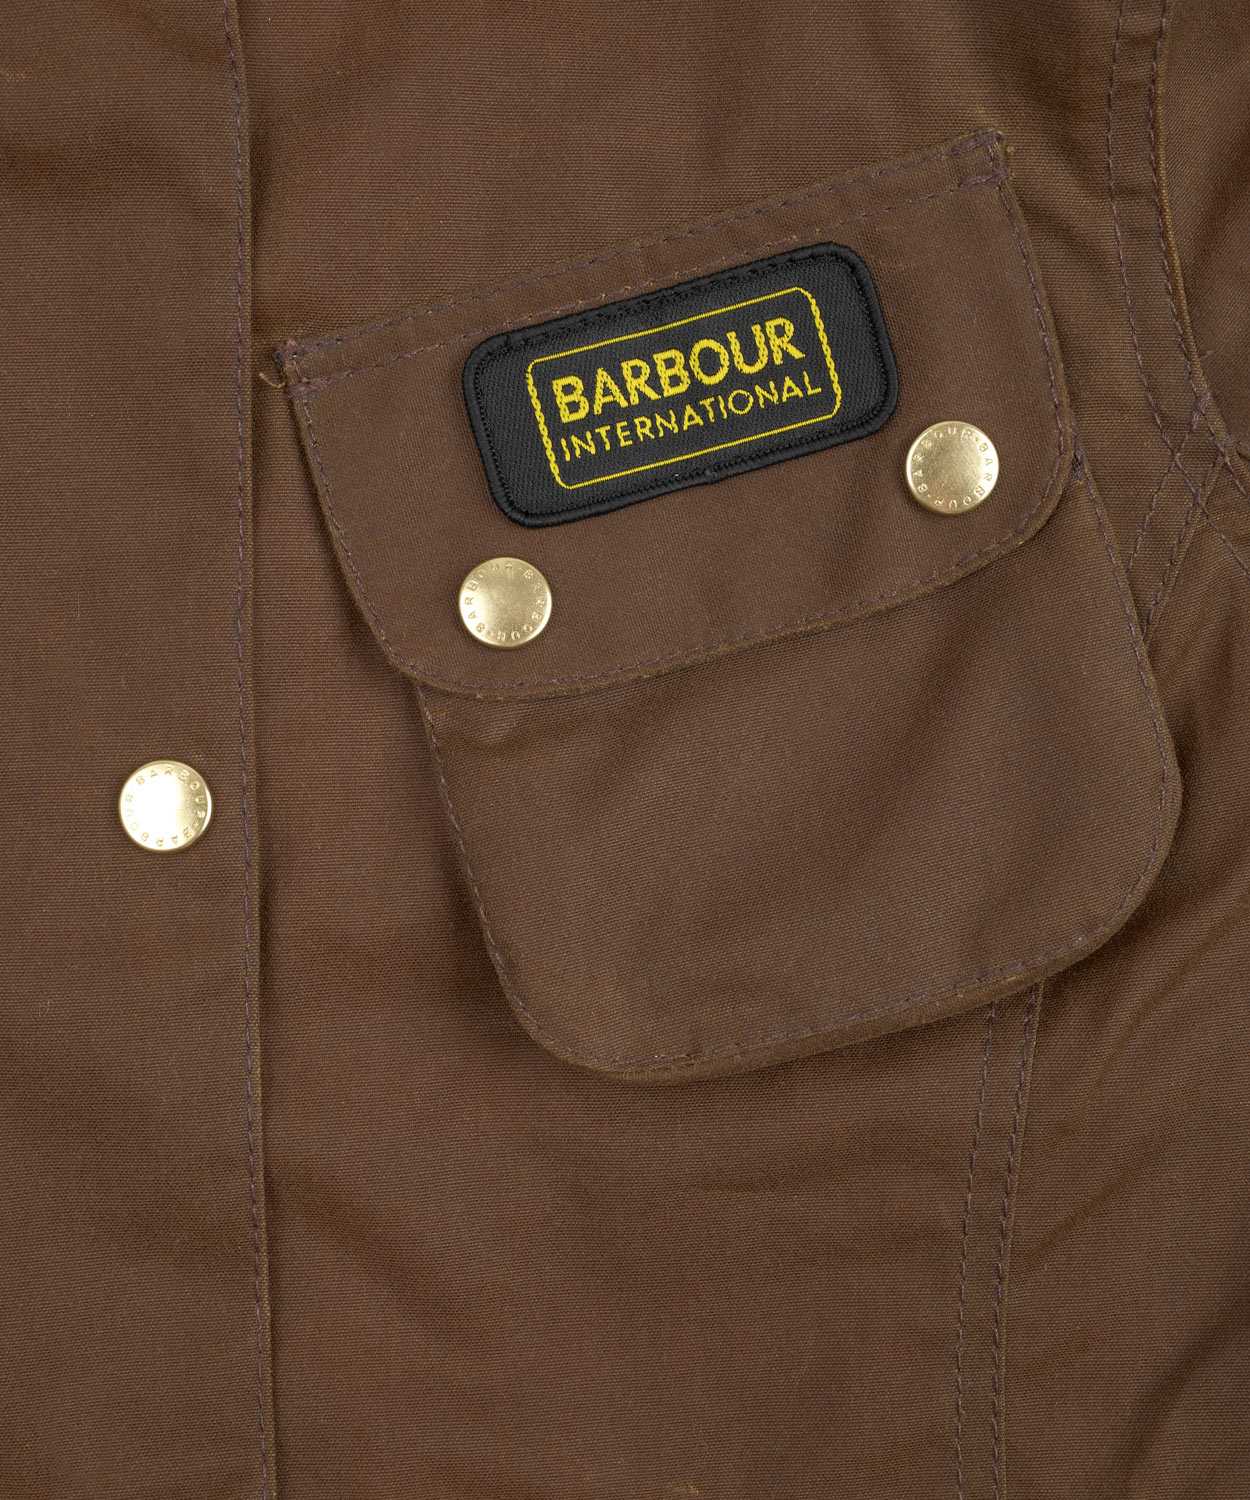 barbour international brown jacket